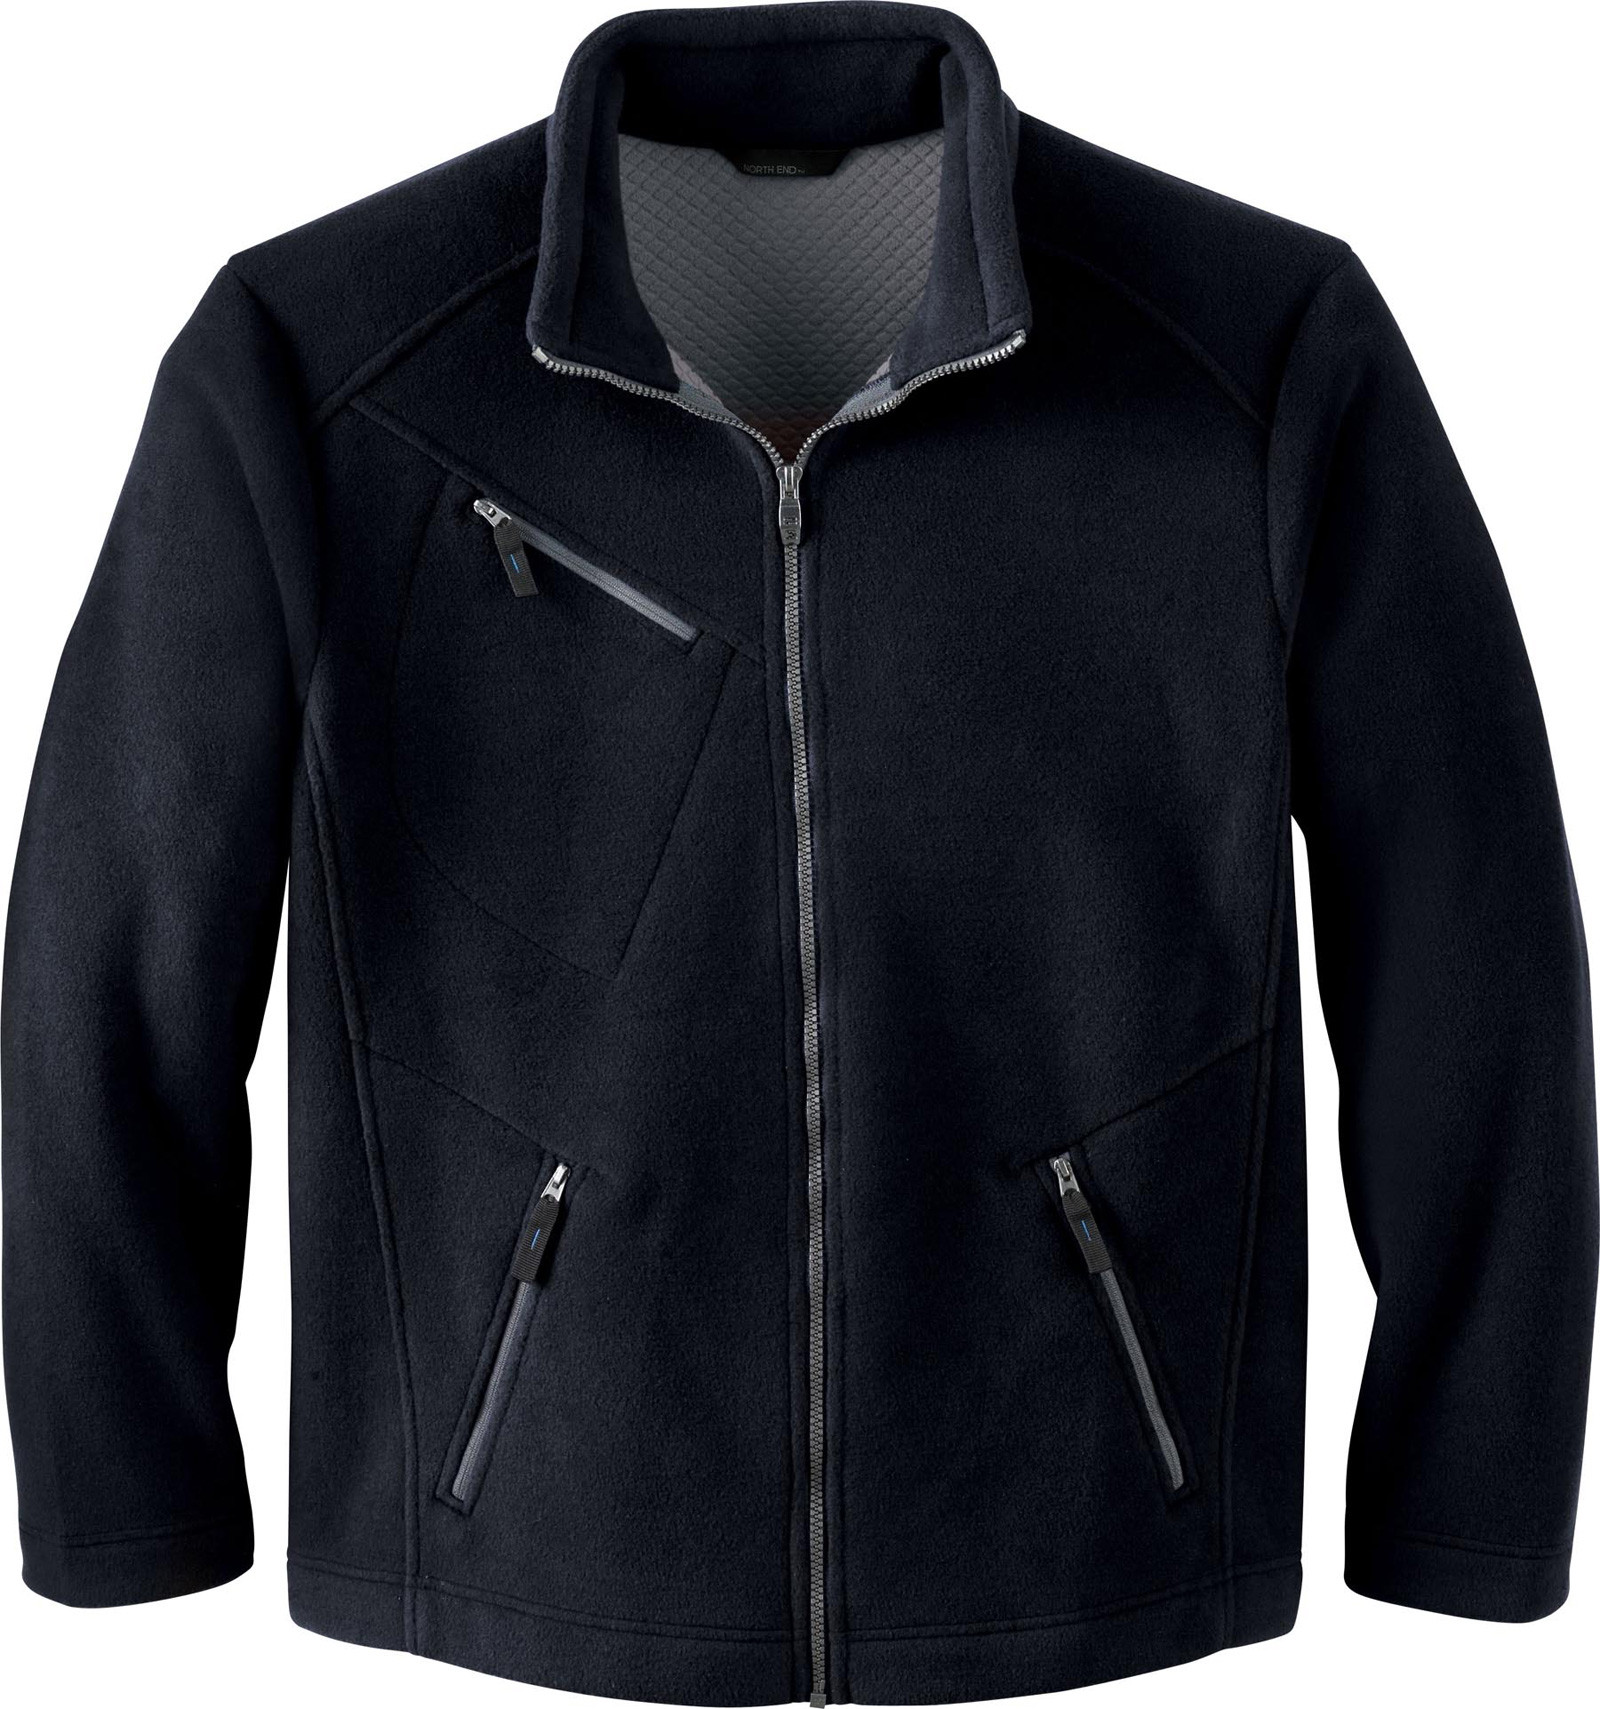 Ash City Bonded Fleece 88157 - Men's Bonded Jacqoard Fleece Jacket